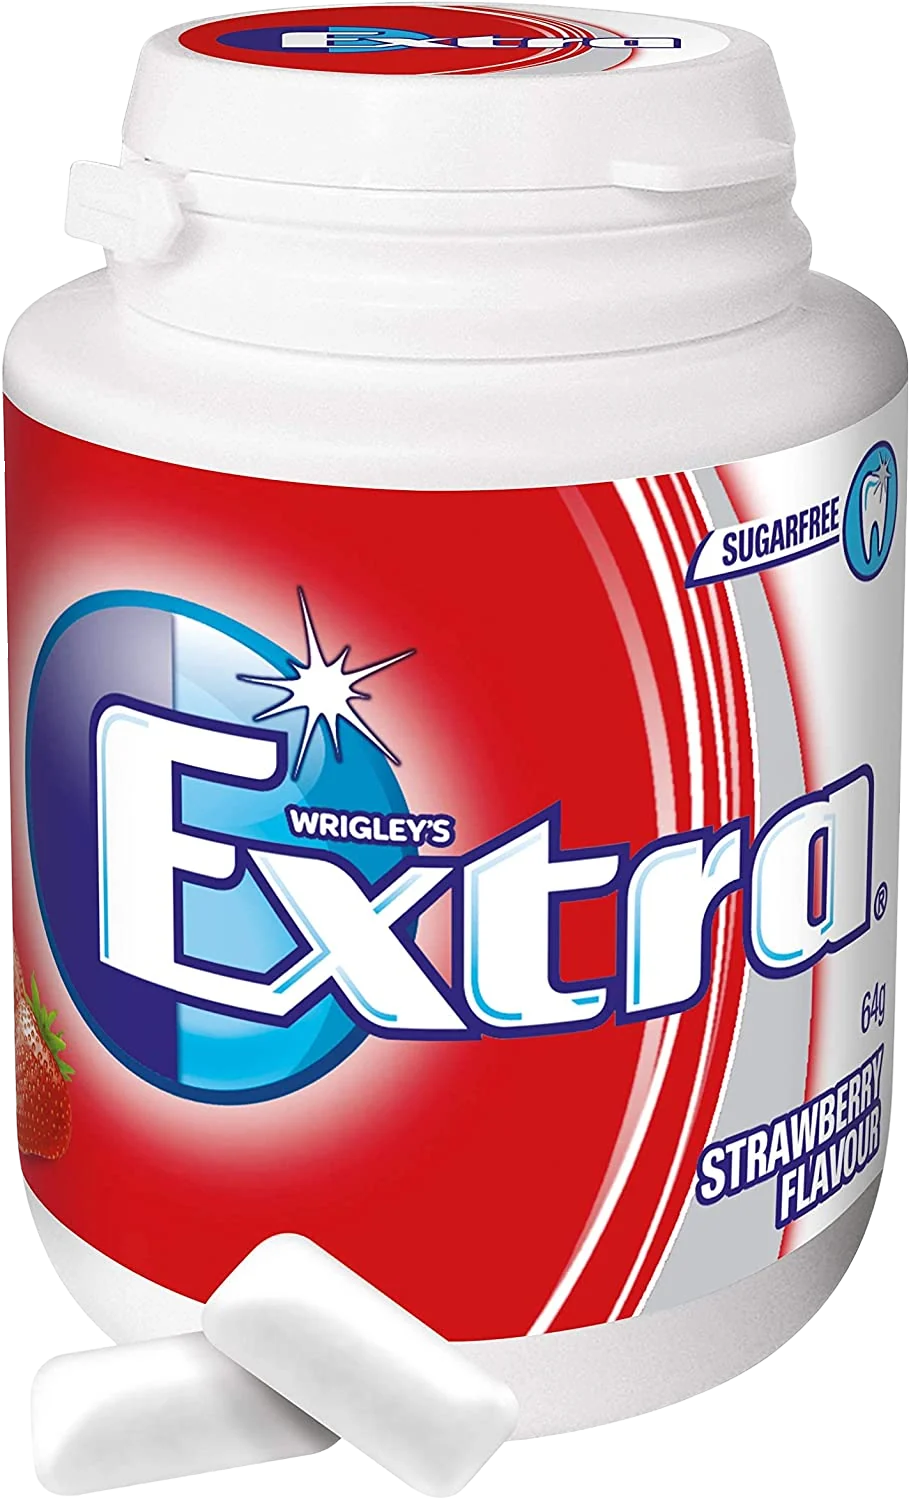 Extra Strawberry Sugar Free Chewing Gum Bottle 64g